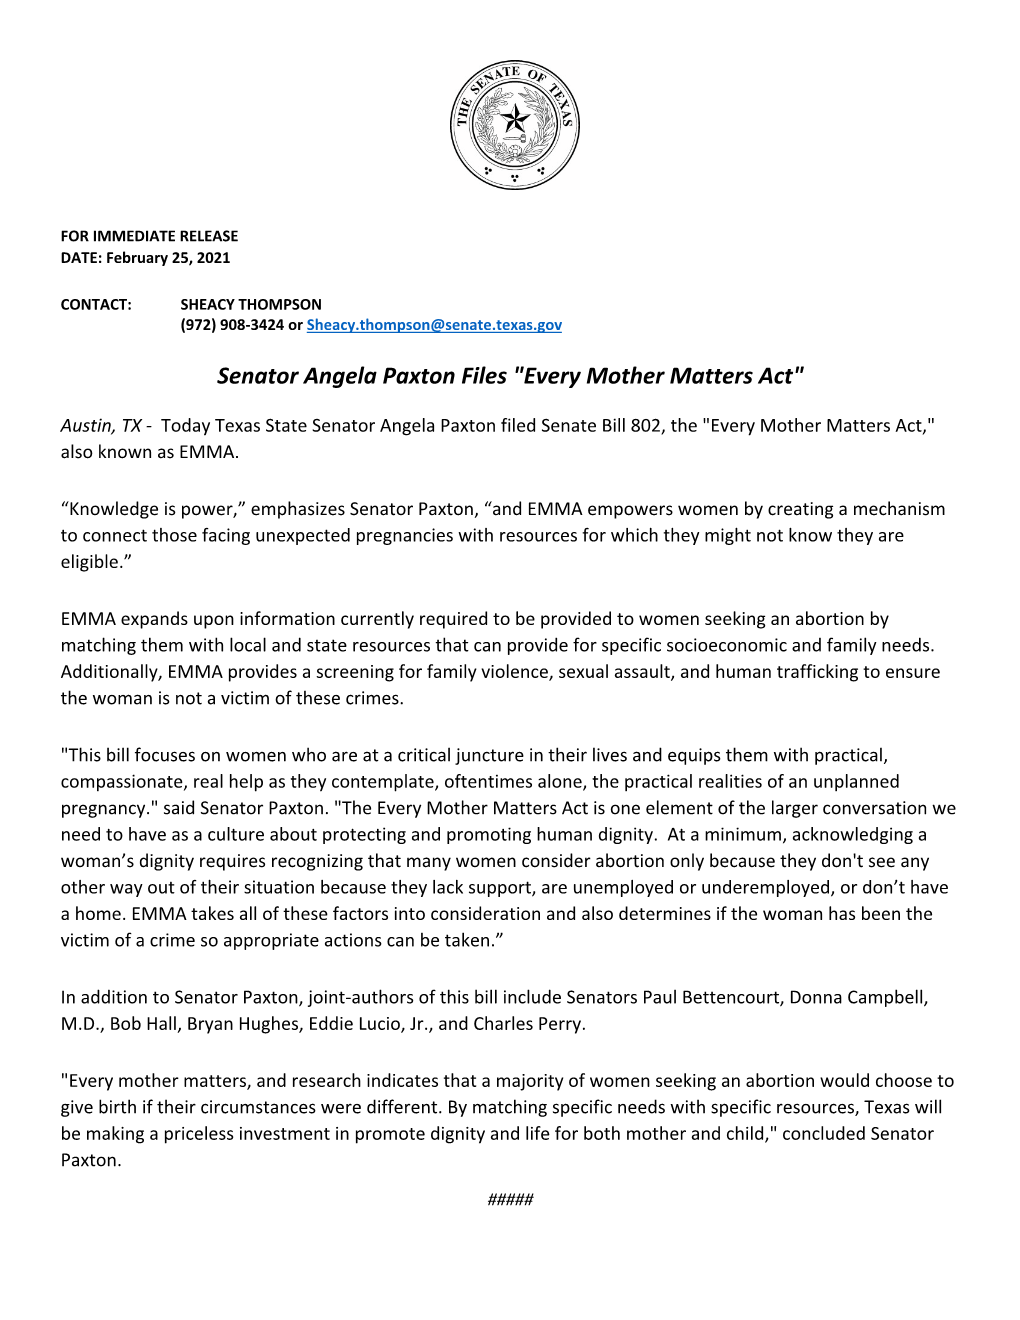 Senator Angela Paxton Files "Every Mother Matters Act"